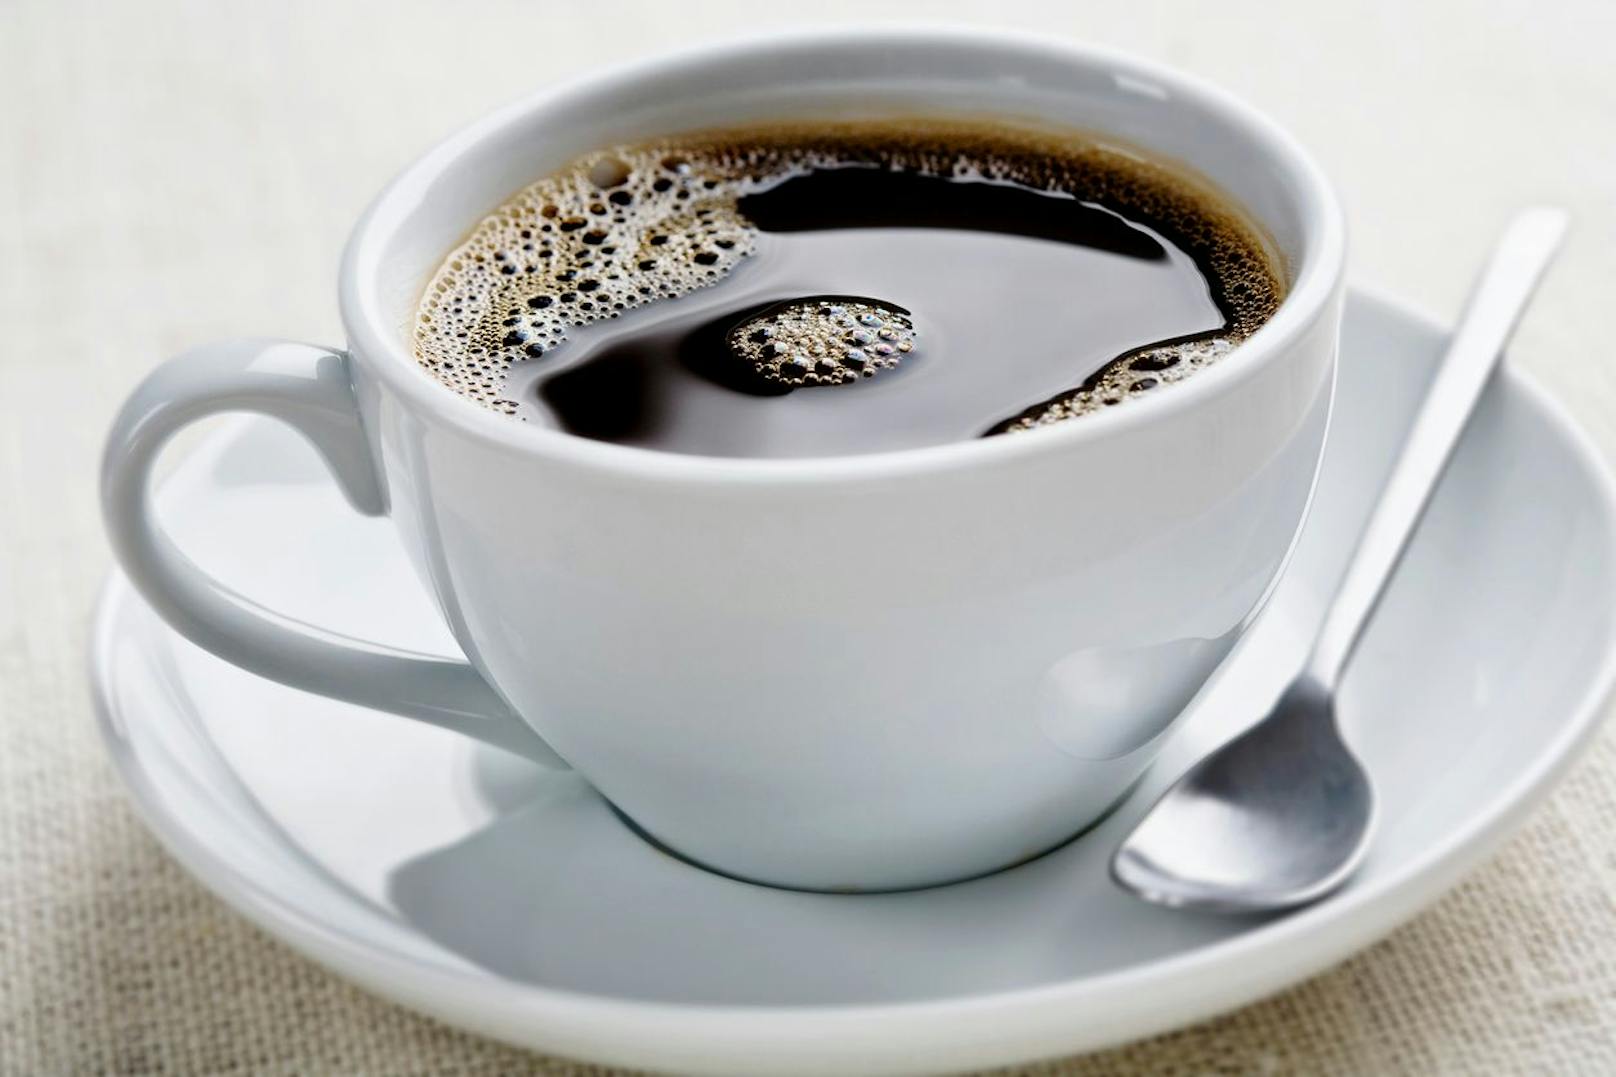 Kaffee bitte in Maßen, nicht in Mengen konsumieren.